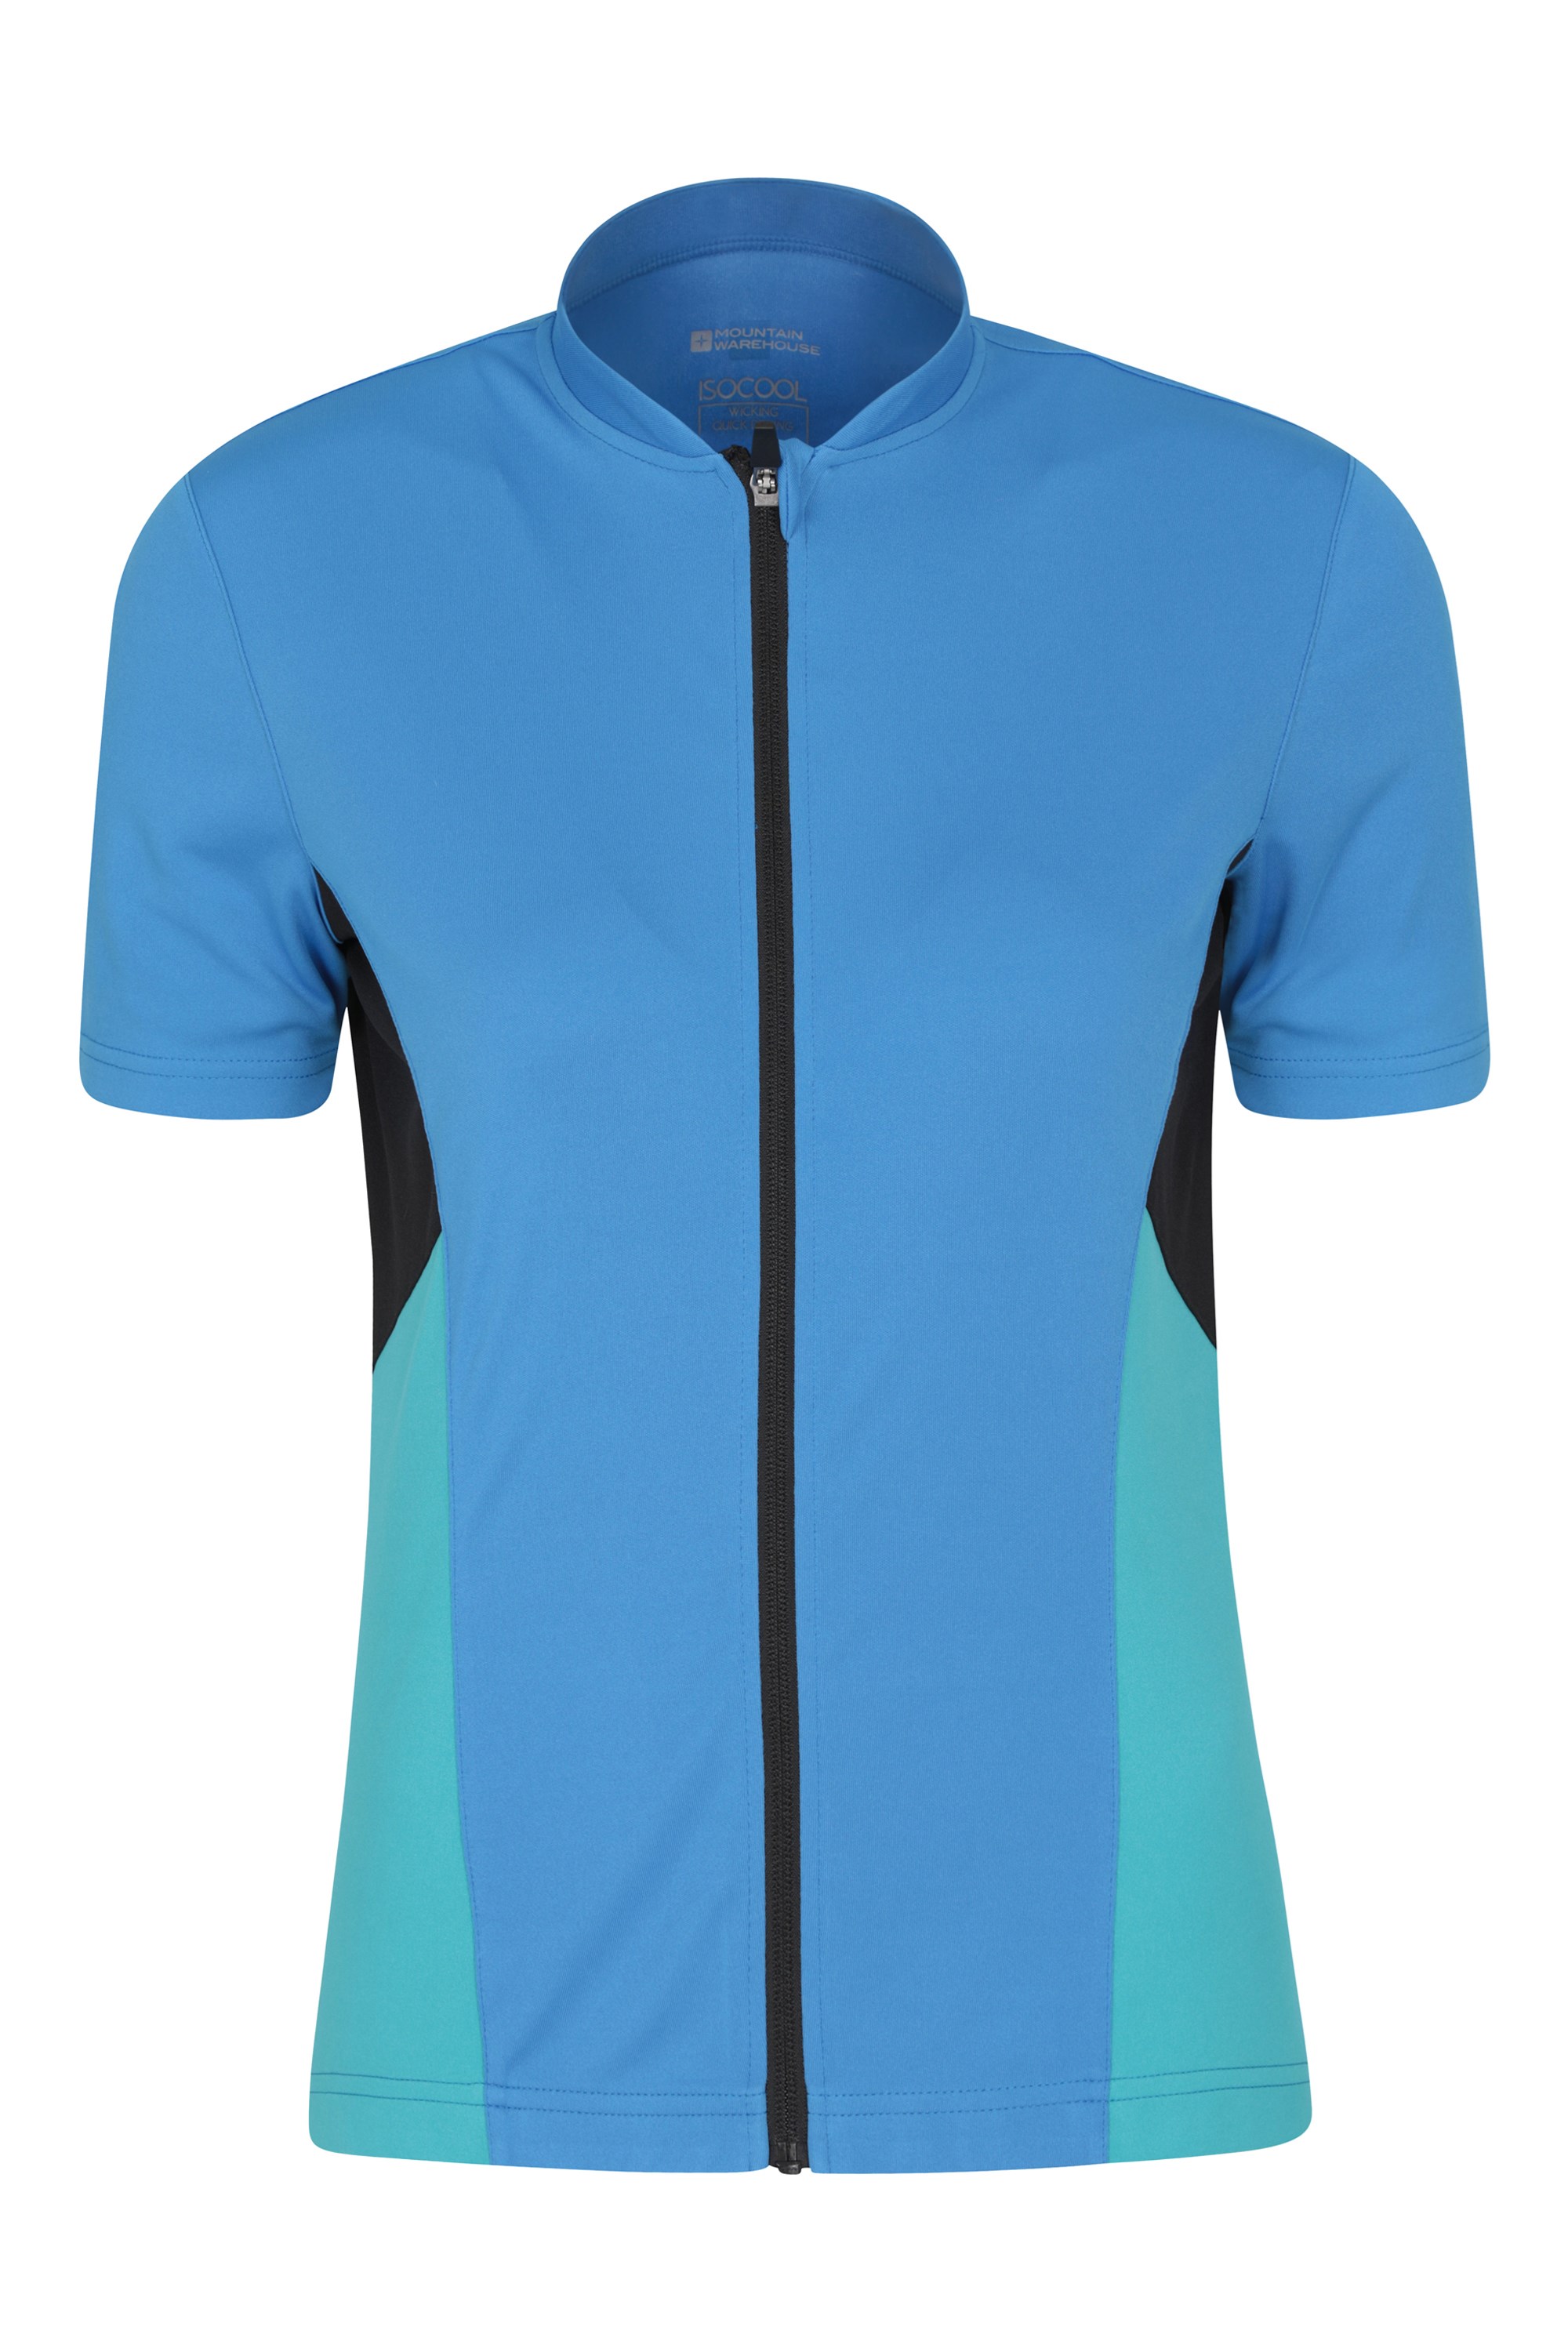 T-shirt de vélo Energize femme - Bleu